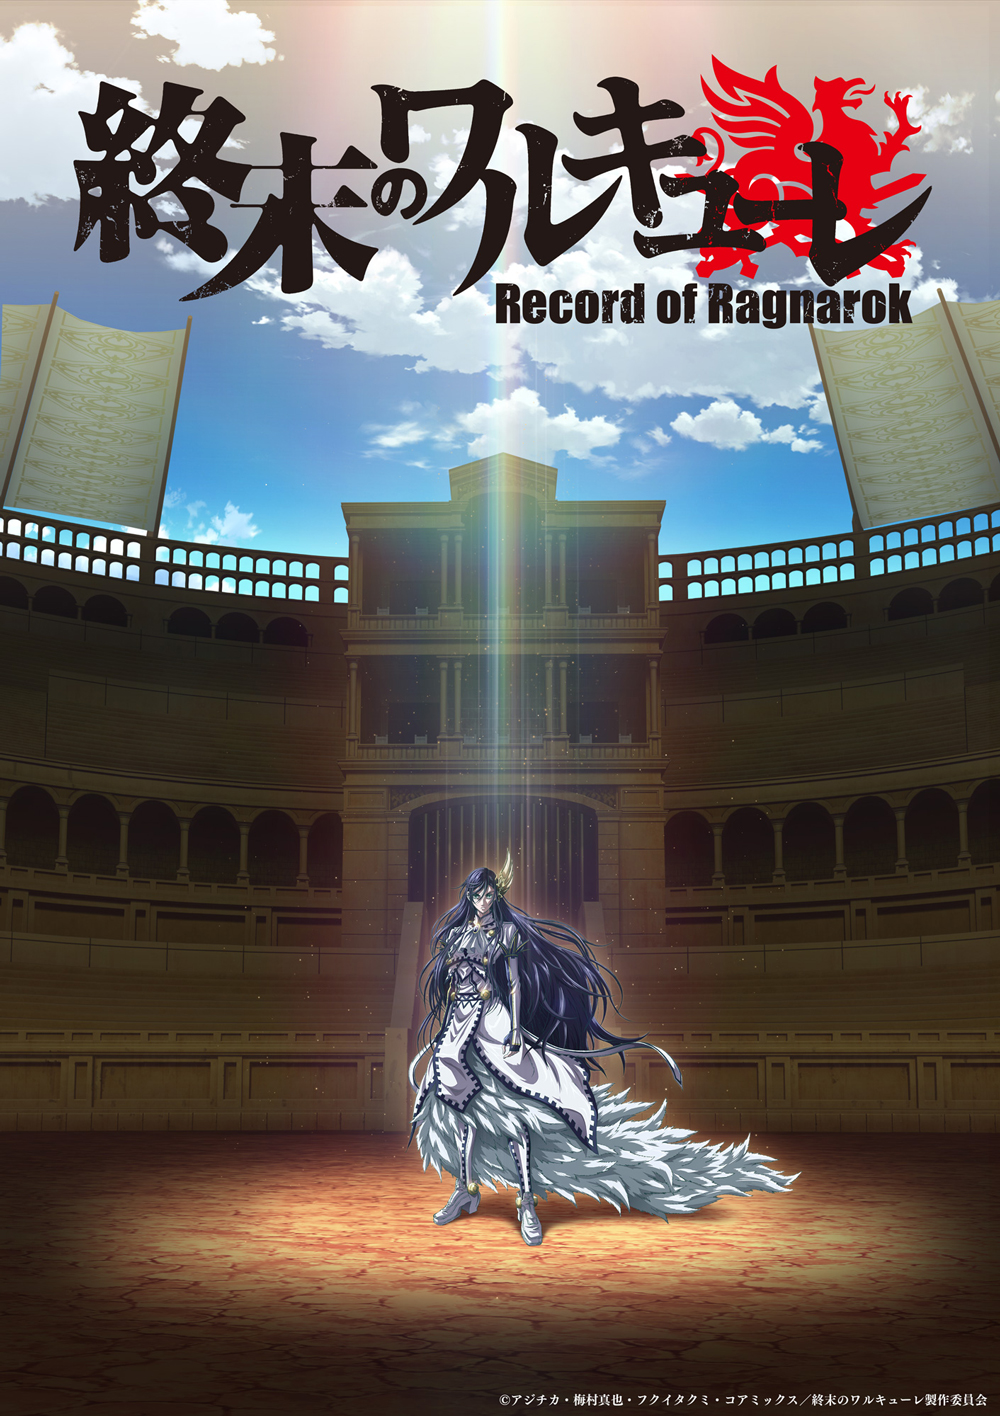 anime and manga news - Record of Ragnarok